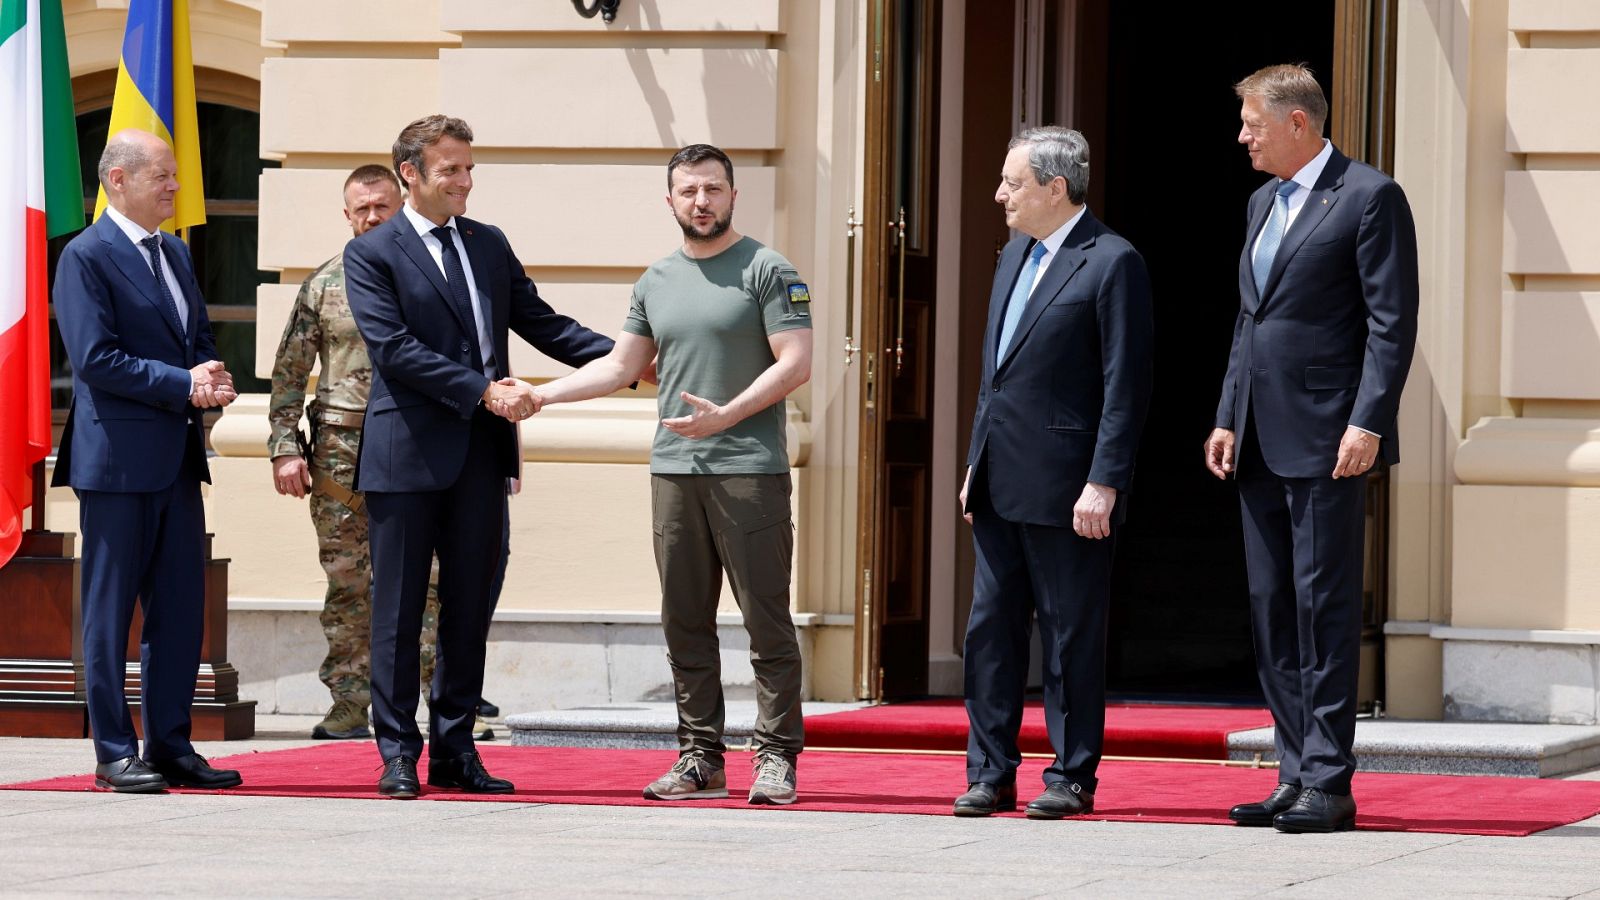 Guerra en Ucrania | Macron, Scholz y Draghi visitan a Zelenski en Kiev